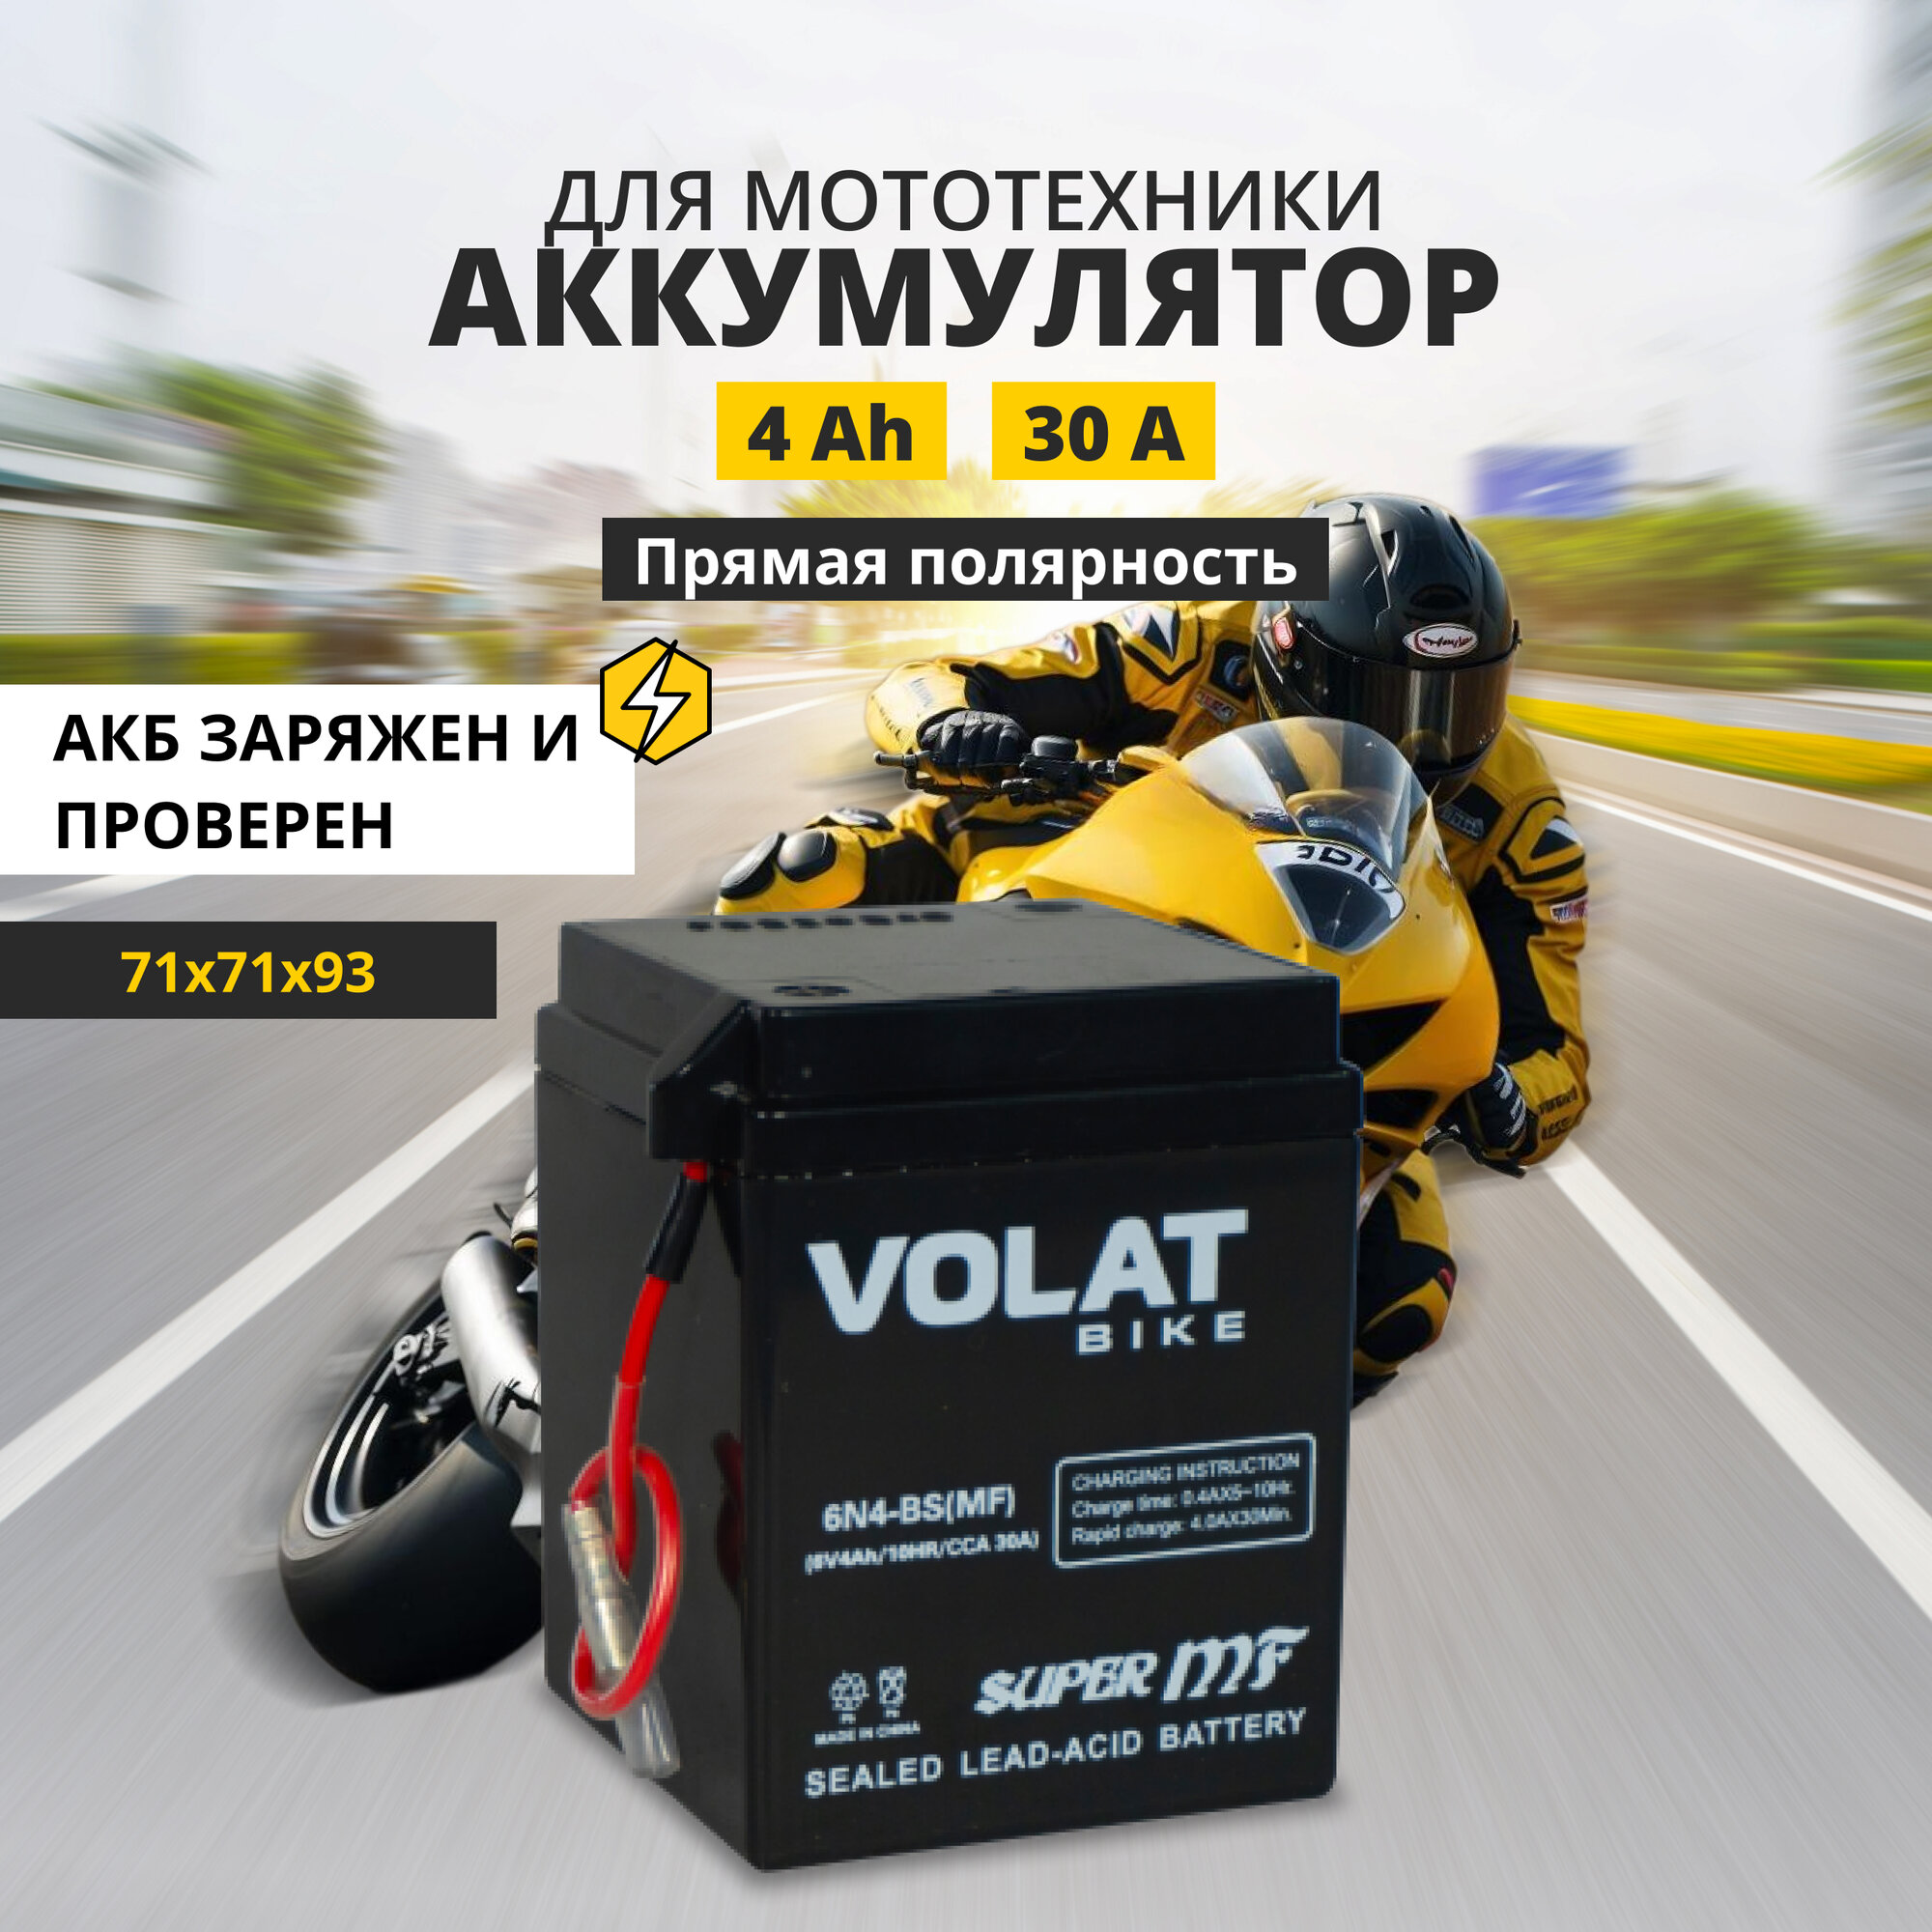 Аккумулятор для мотоцикла 6v Volat 6N4-BS(MF) прямая полярность 4 Ah 30 A AGM акб на скутер мопед квадроцикл 71x71x93 мм